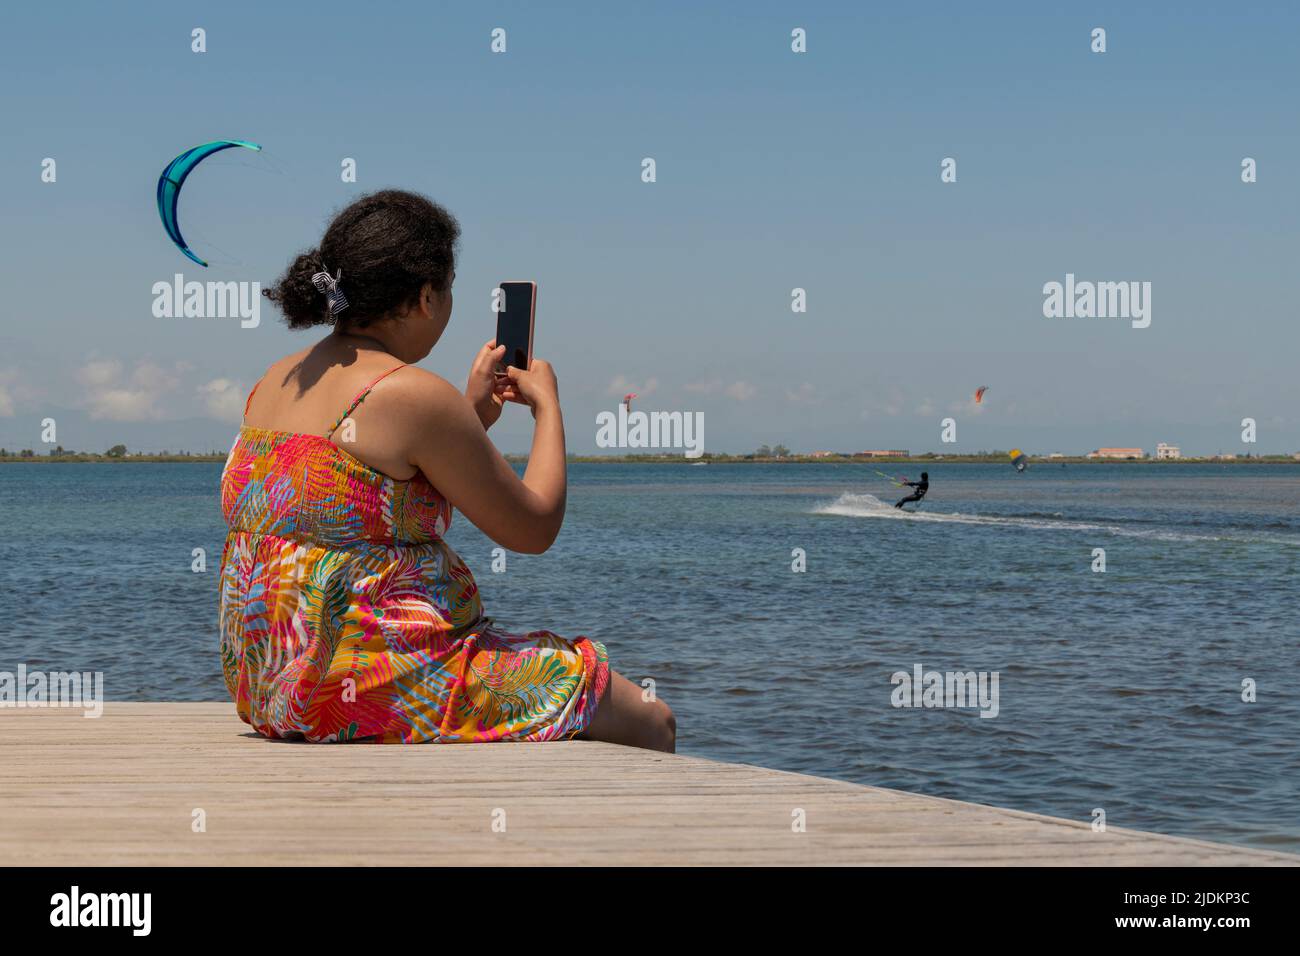 Sitting woman on a pontoon bridge with a kite surfer Stock Photo